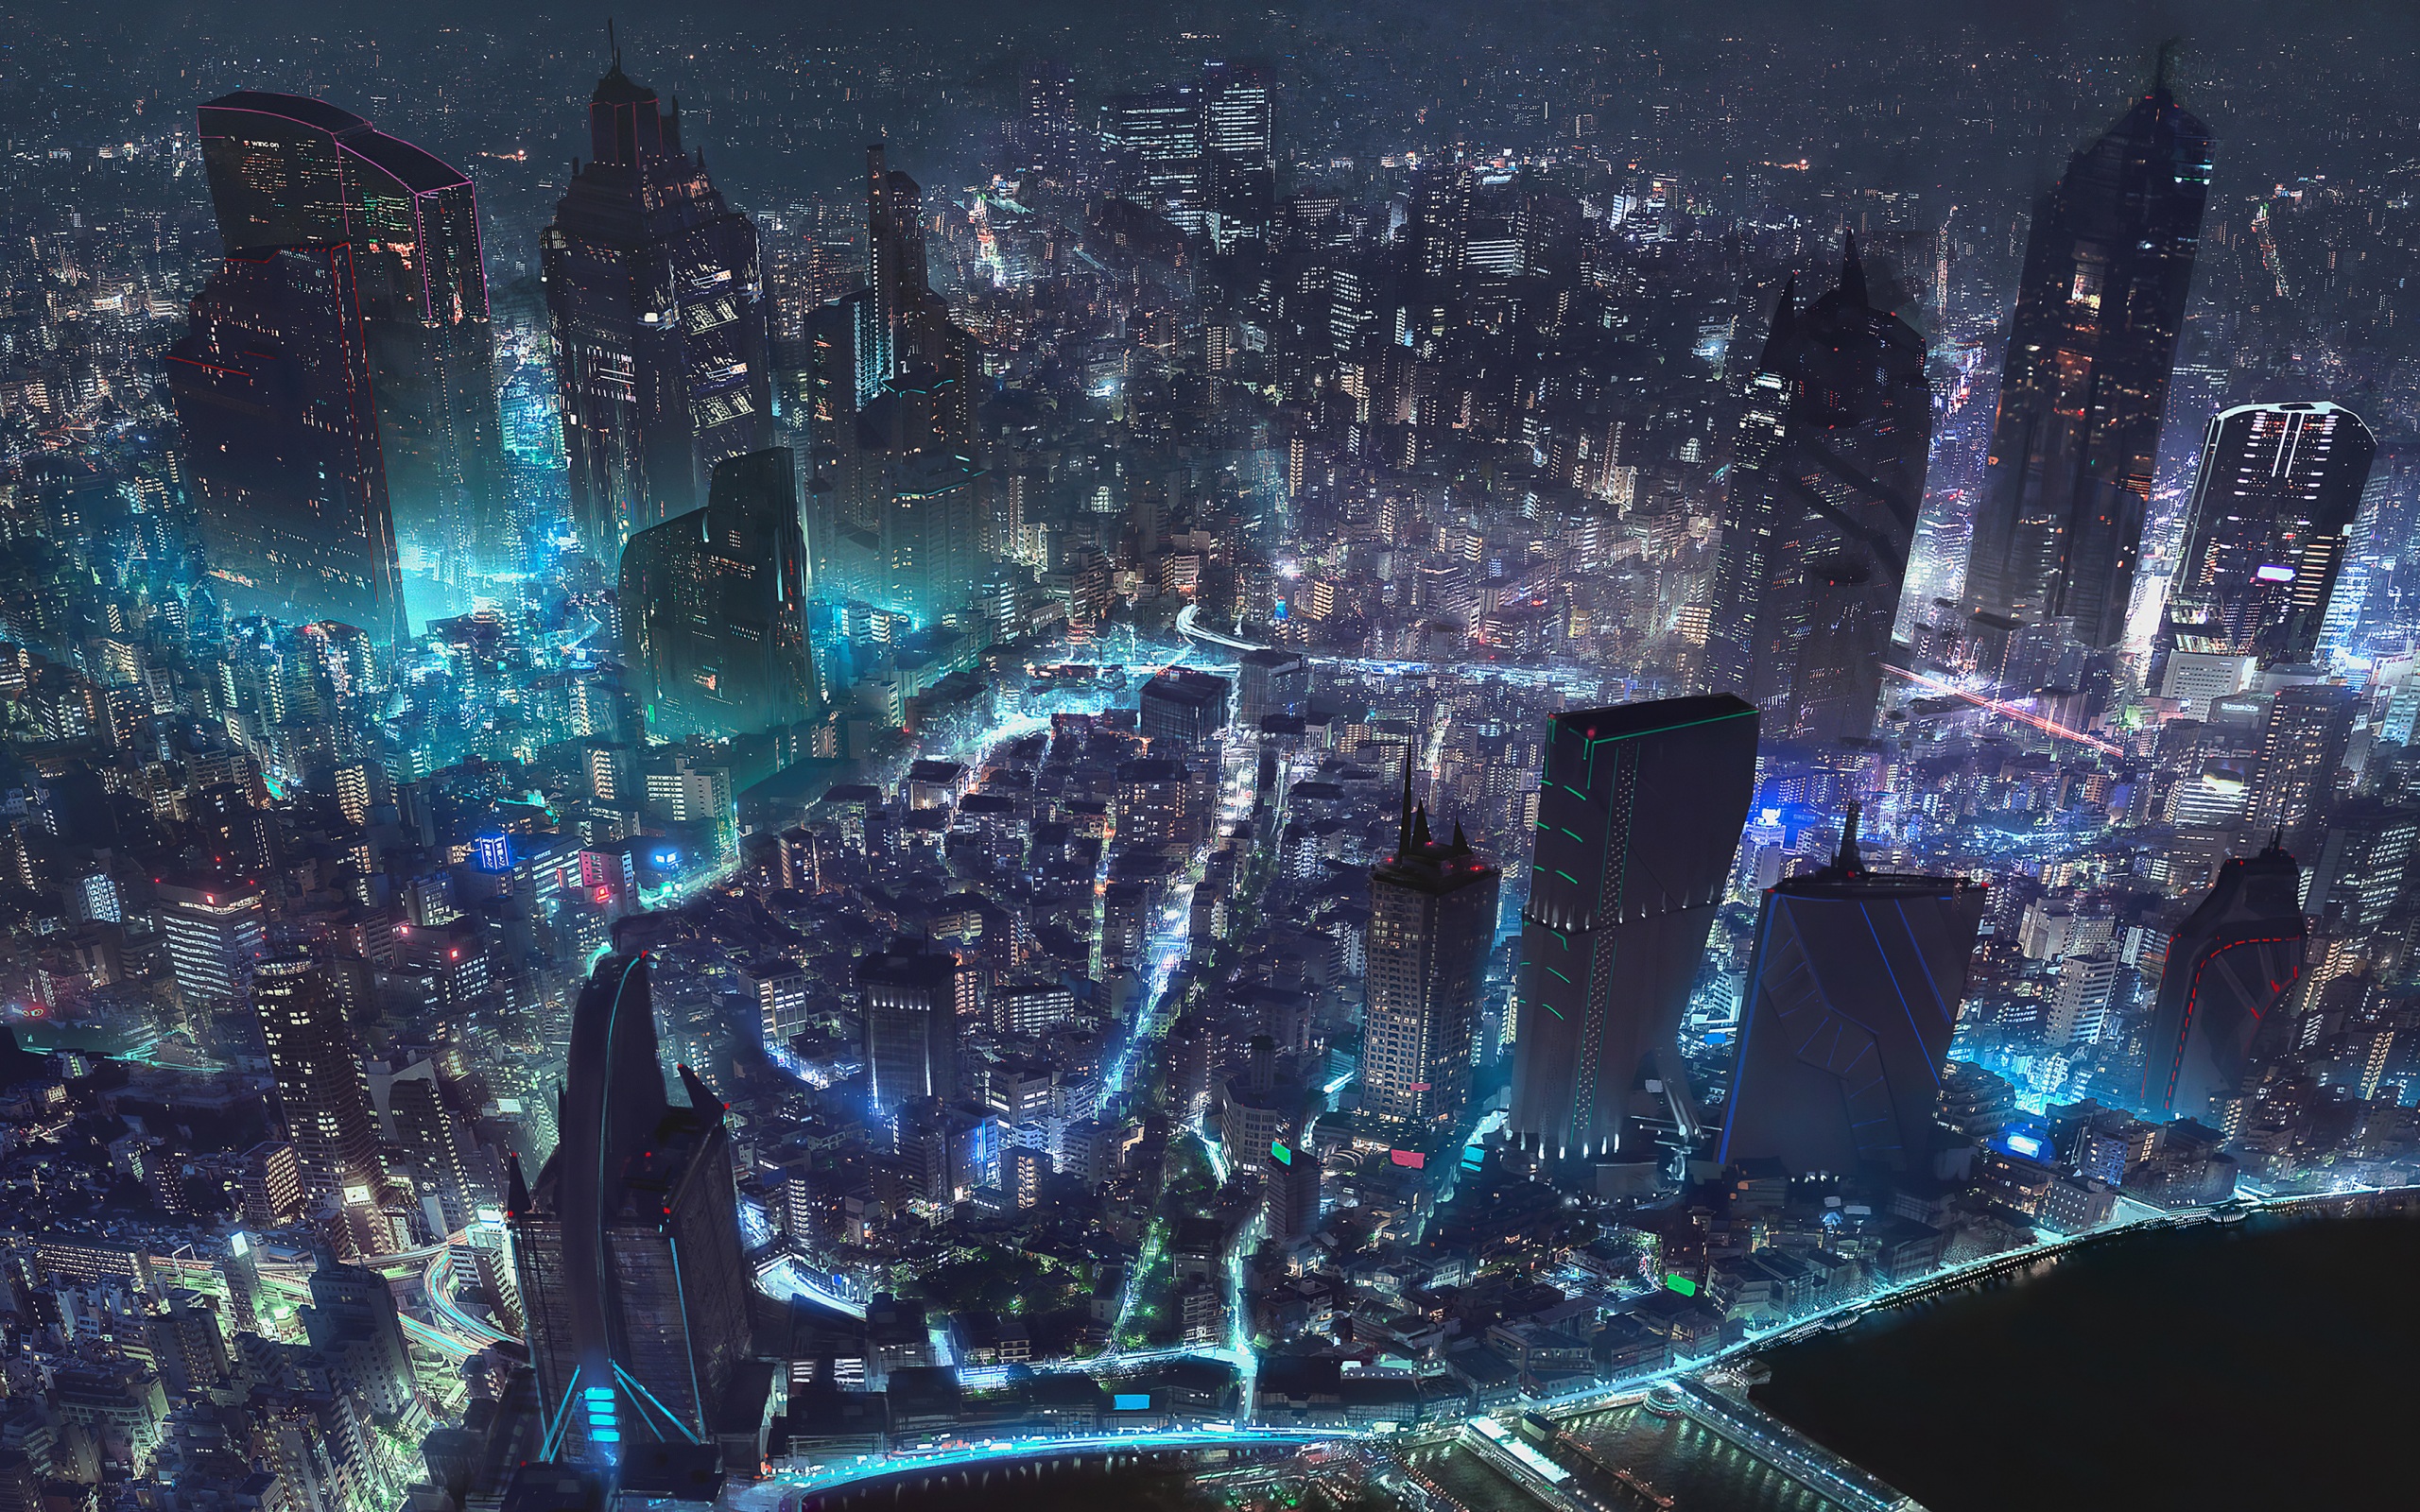 Futuristic Desktop backgrounds cyberpunk for sci-fi fans